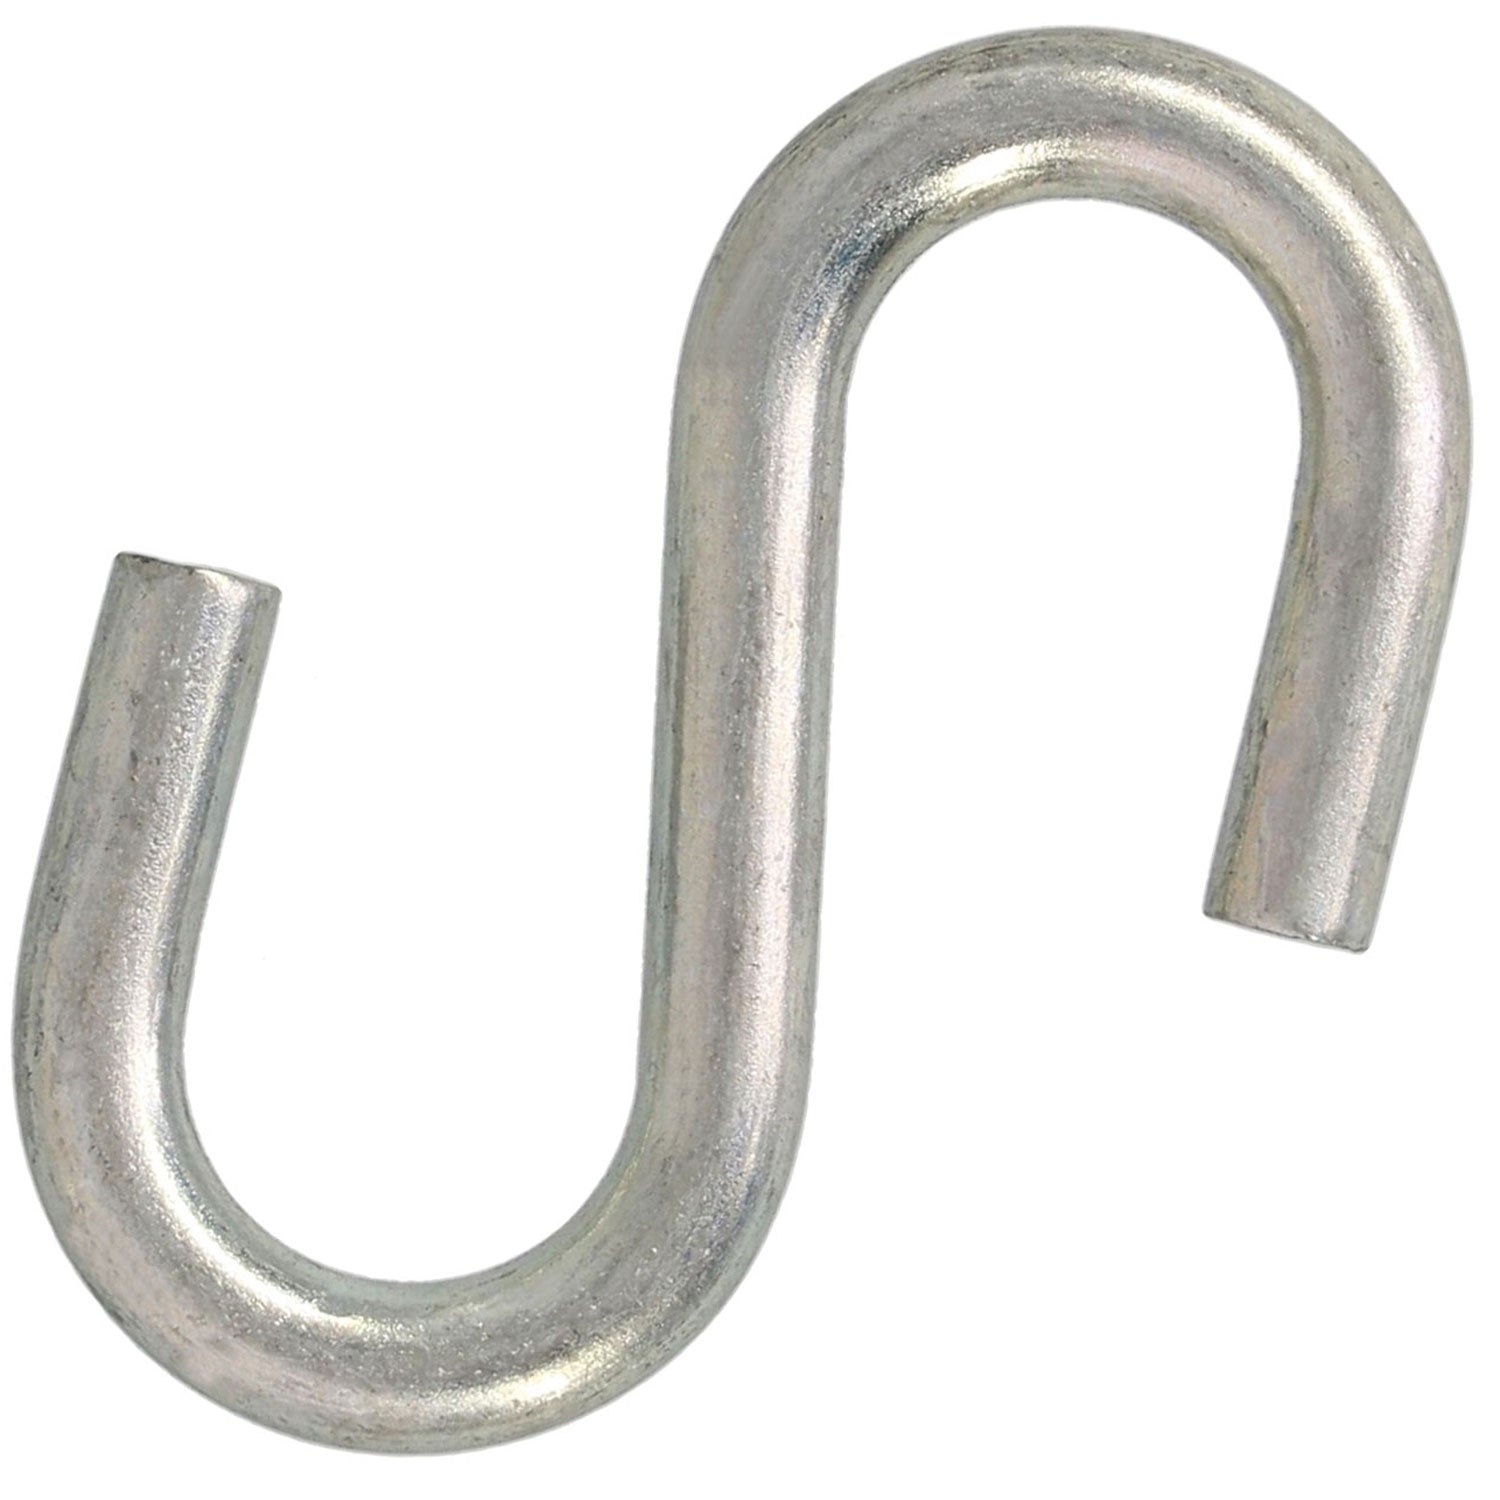 Zinc Plated Symmetric S-Hooks